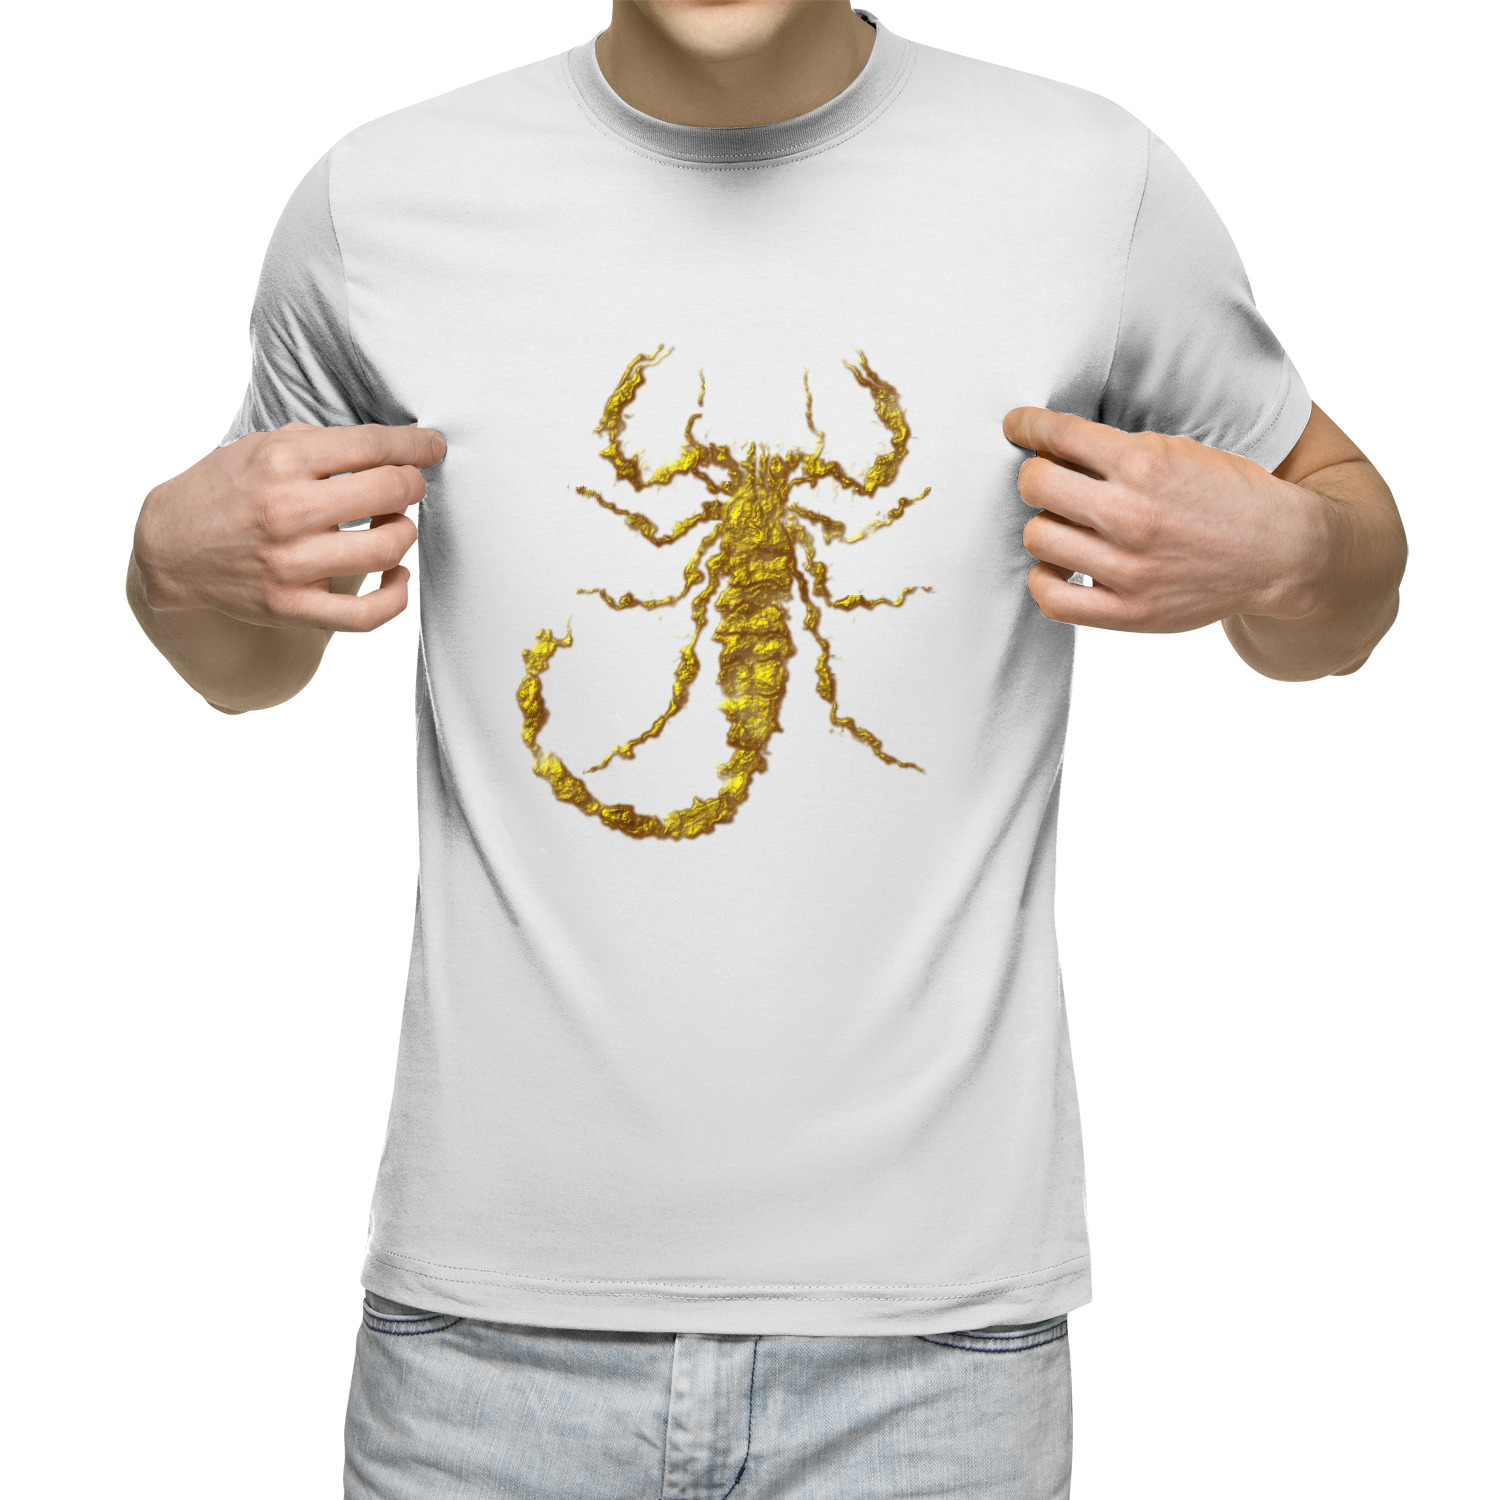 Scorpion white